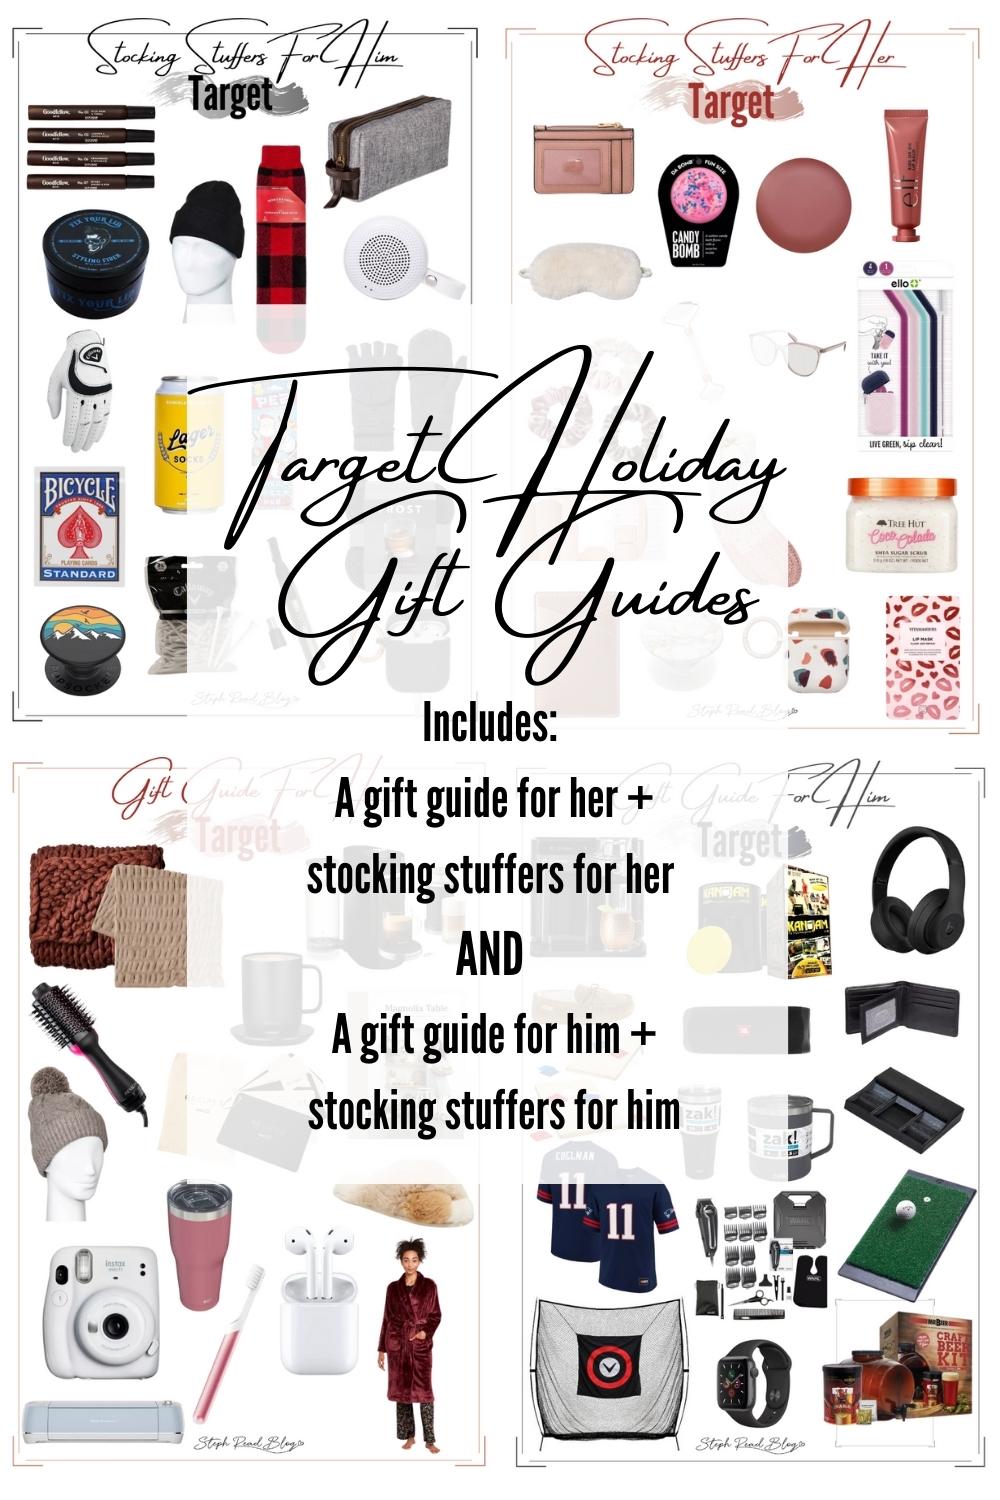 https://stephreadblog.com/wp-content/uploads/2020/12/Target-Holiday-Gift-Guides.jpg